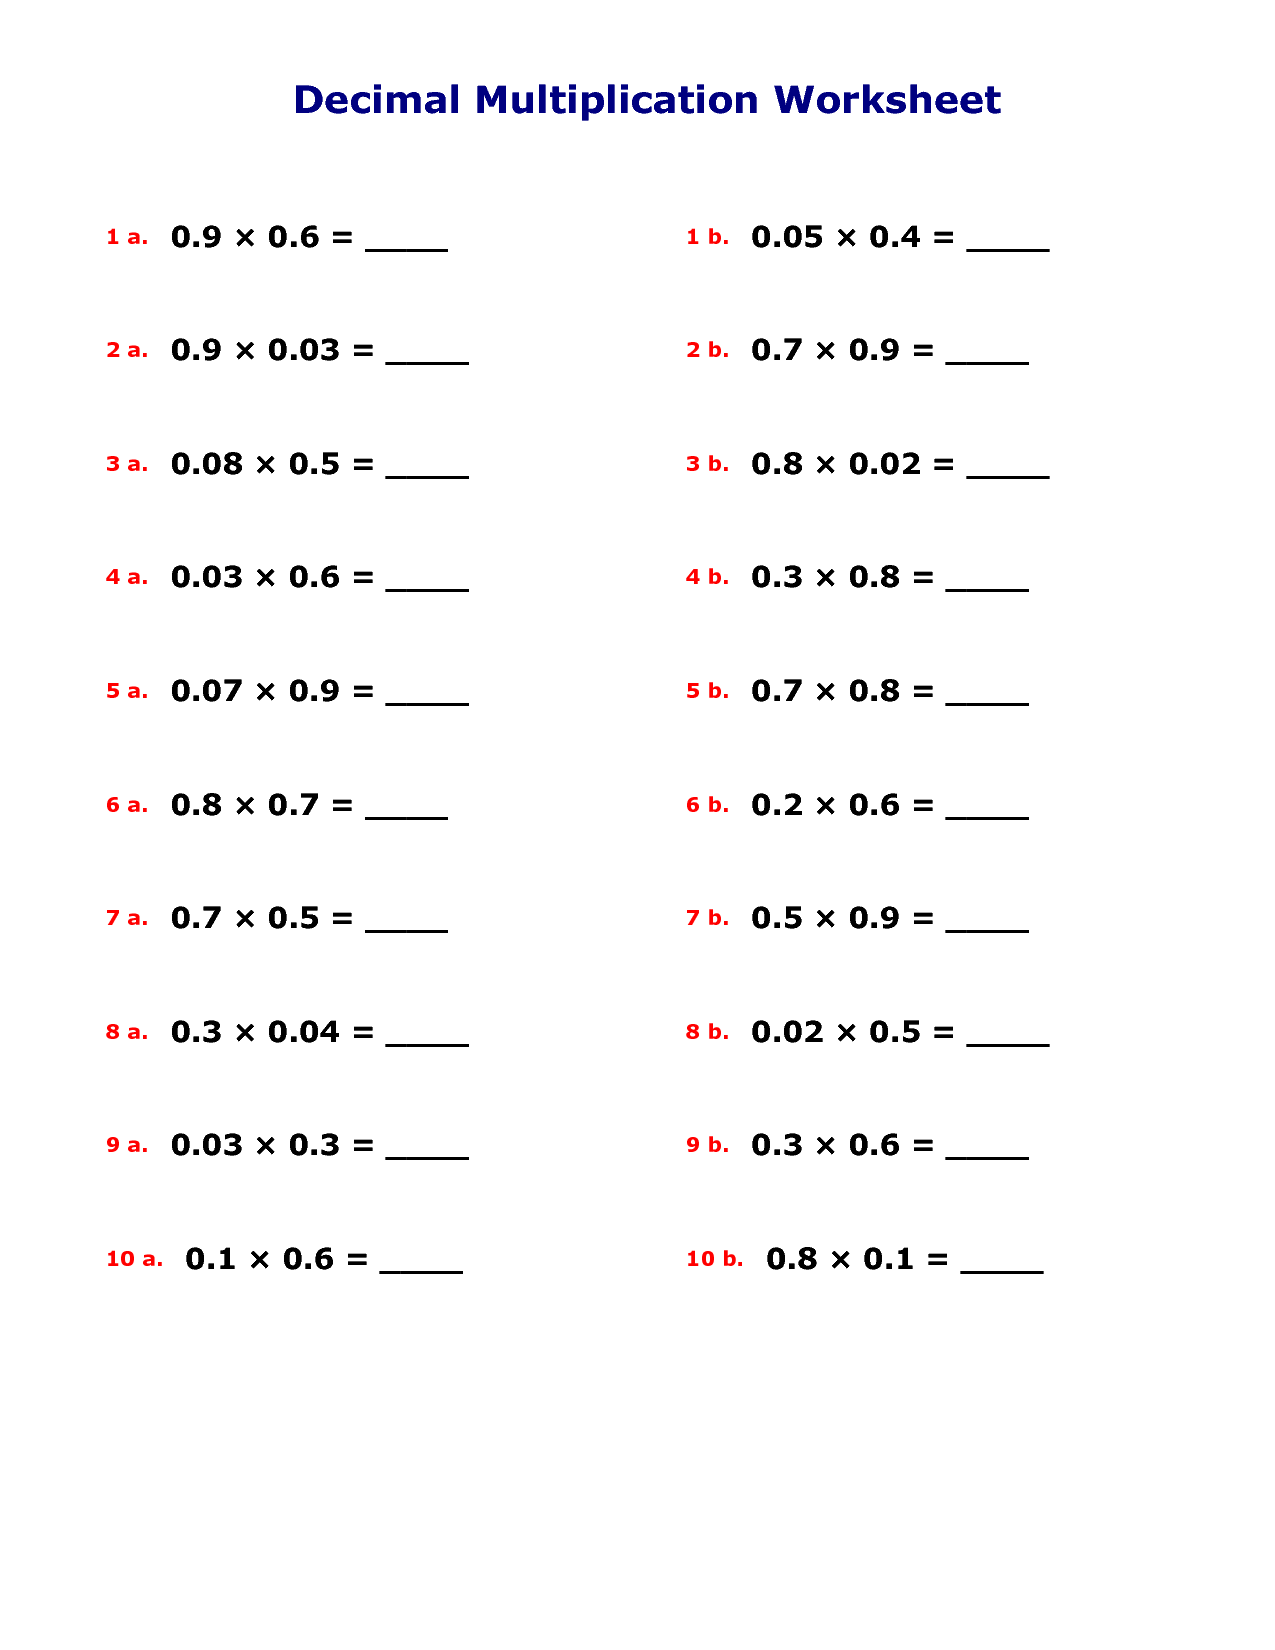 division decimal worksheet for class 5